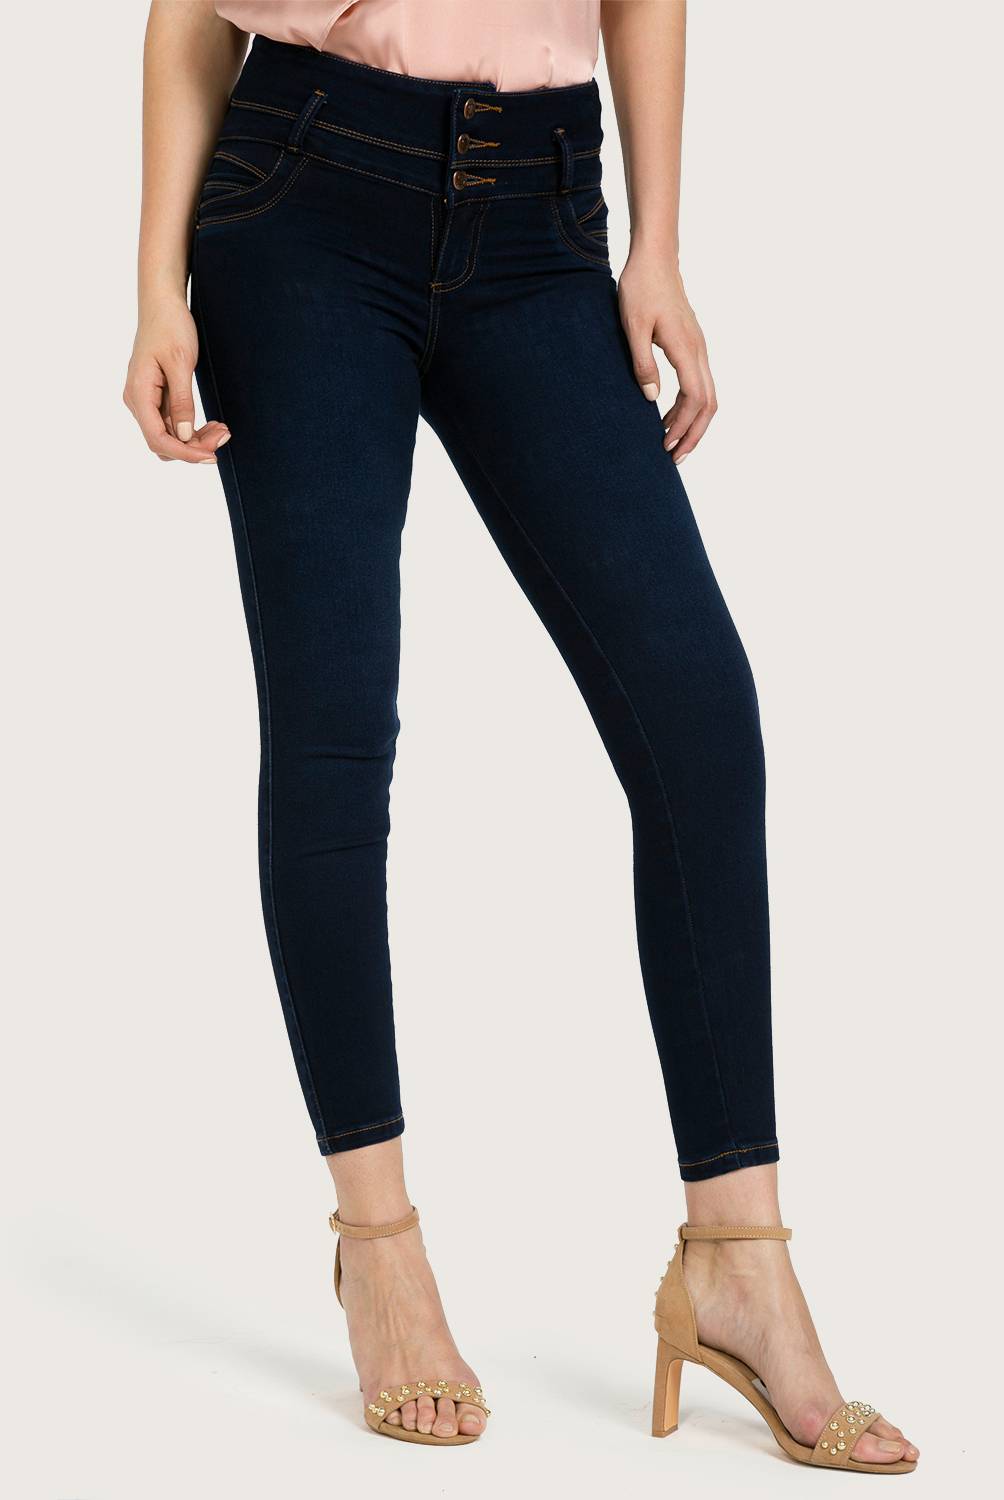 MOSSIMO - Jeans Skinny Tiro  Alto Mujer